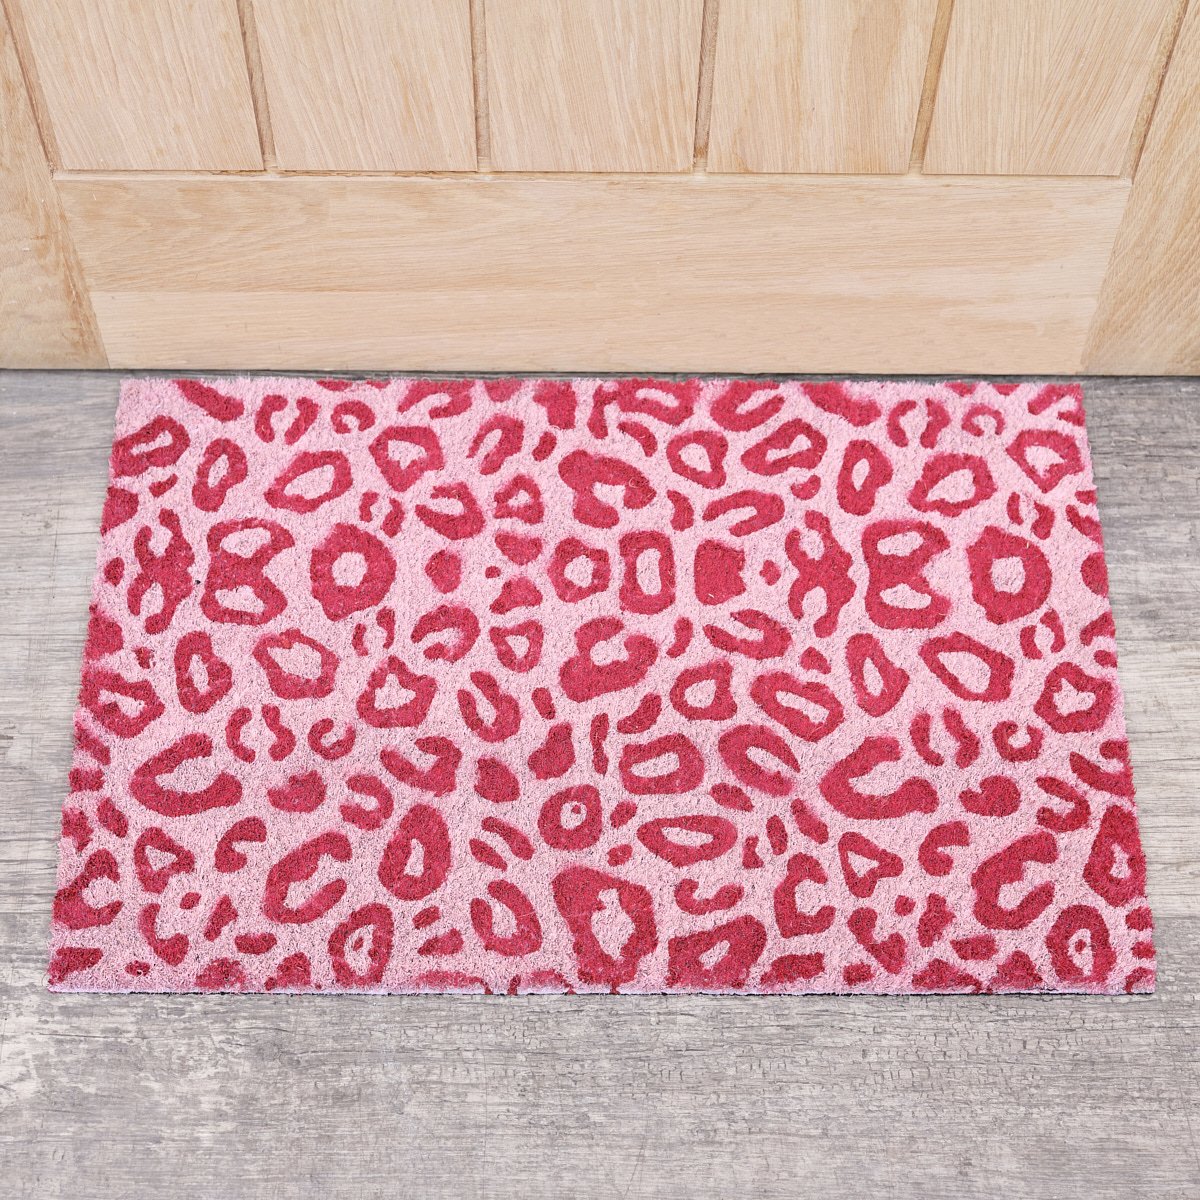 Pink Leopard Print Coir Door Mat